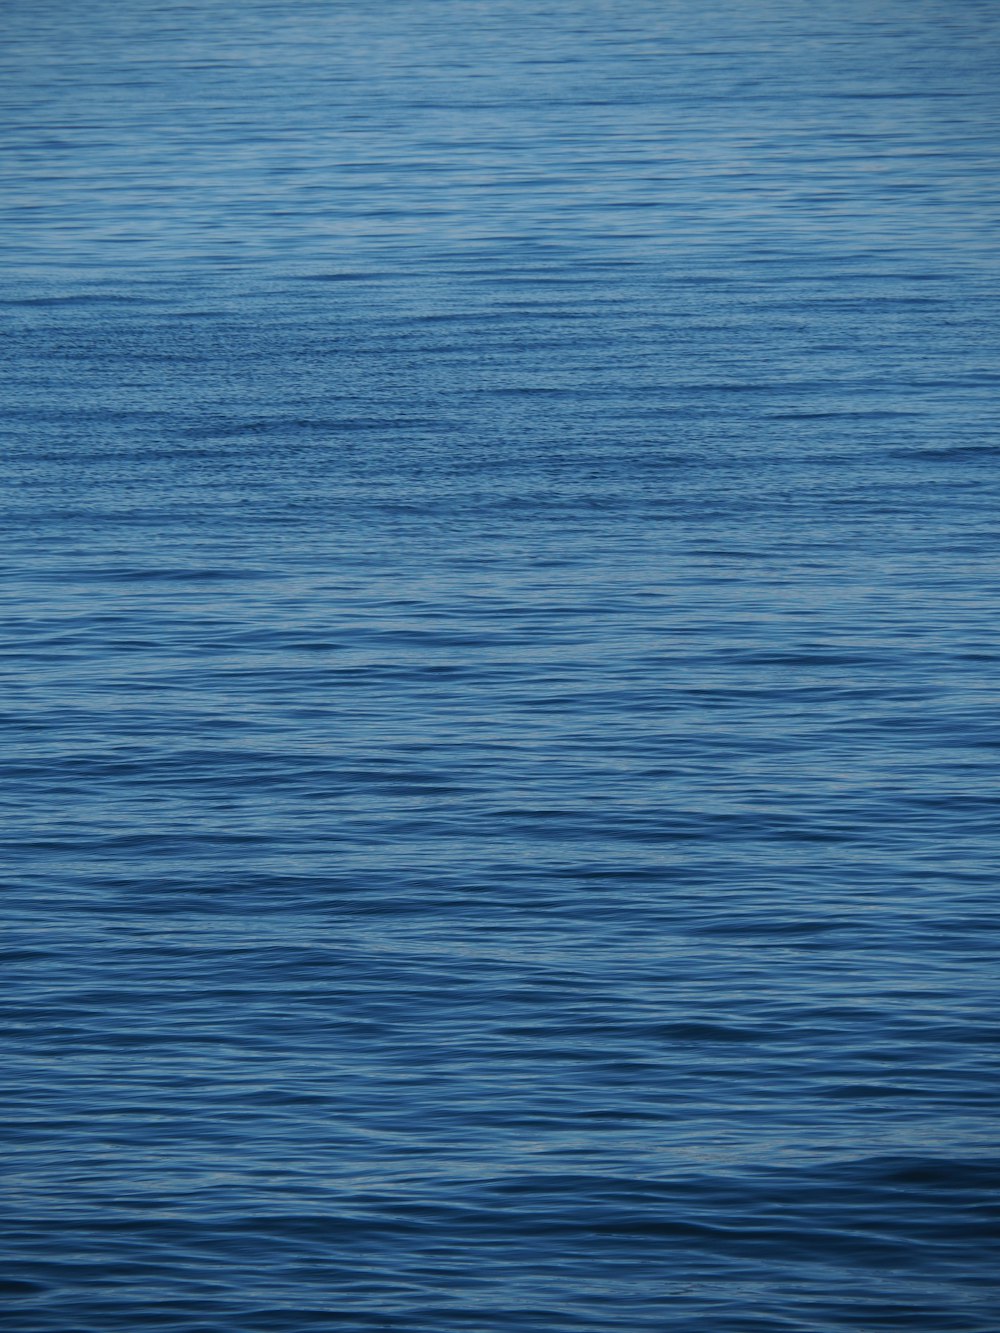 blue sea water during daytime